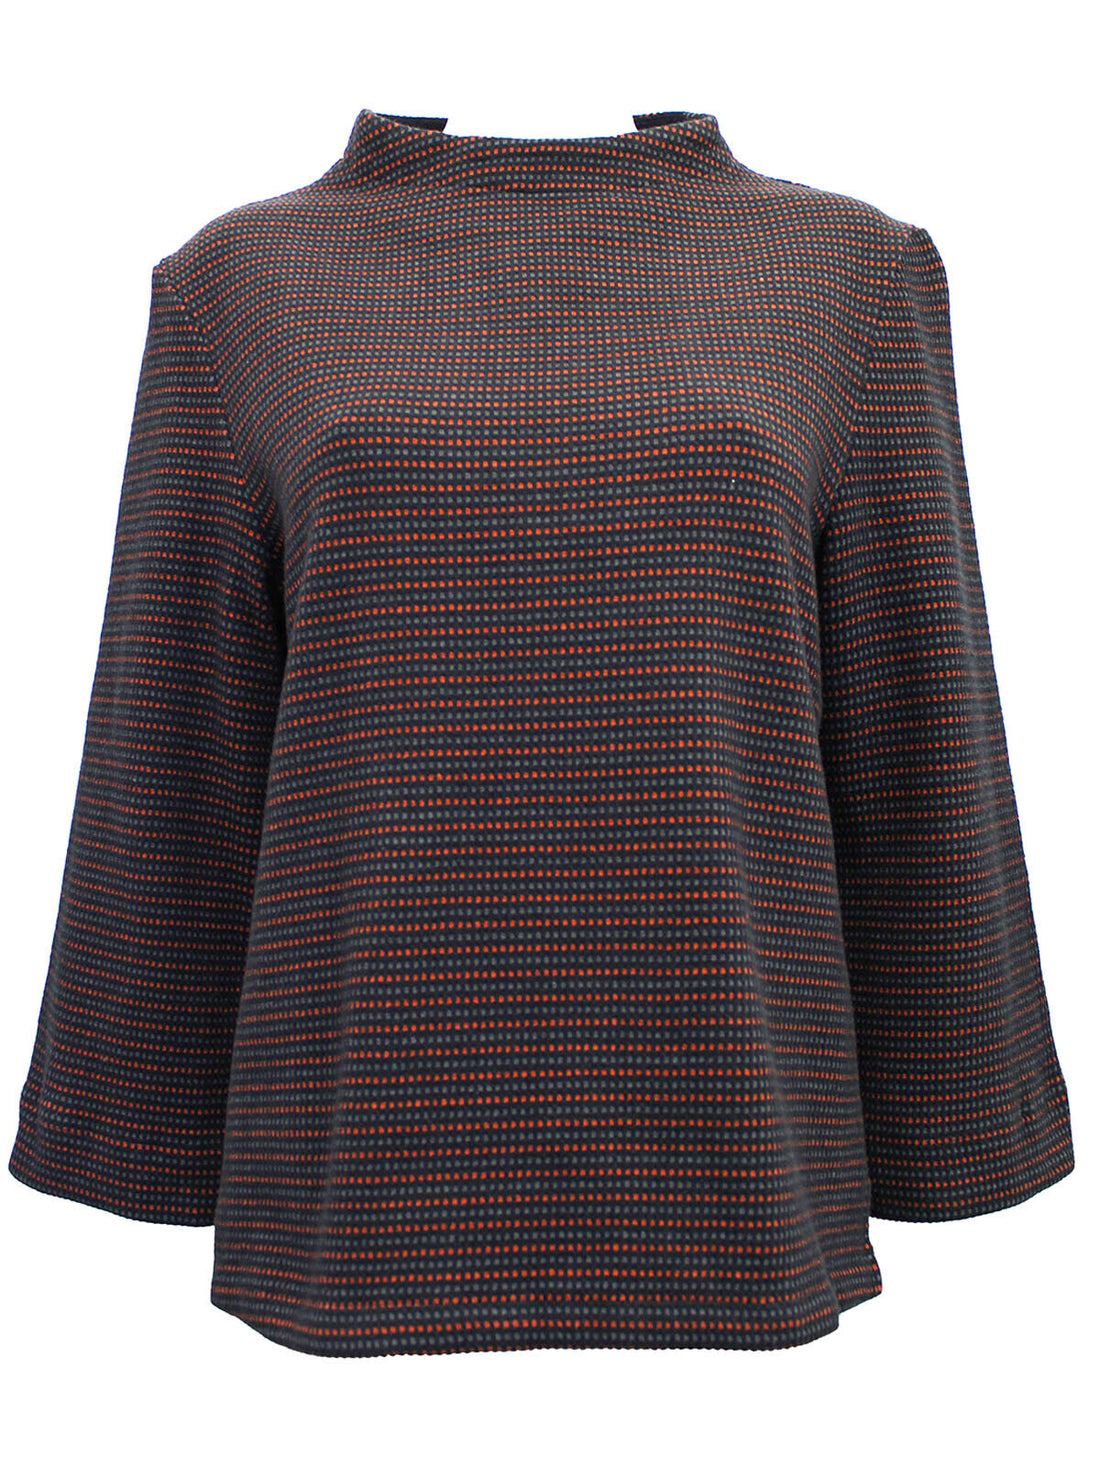 EX Seasalt Multi Stylistic Jacquard Sweatshirt Top Drop Stone Onyx 14-28 RRP £55